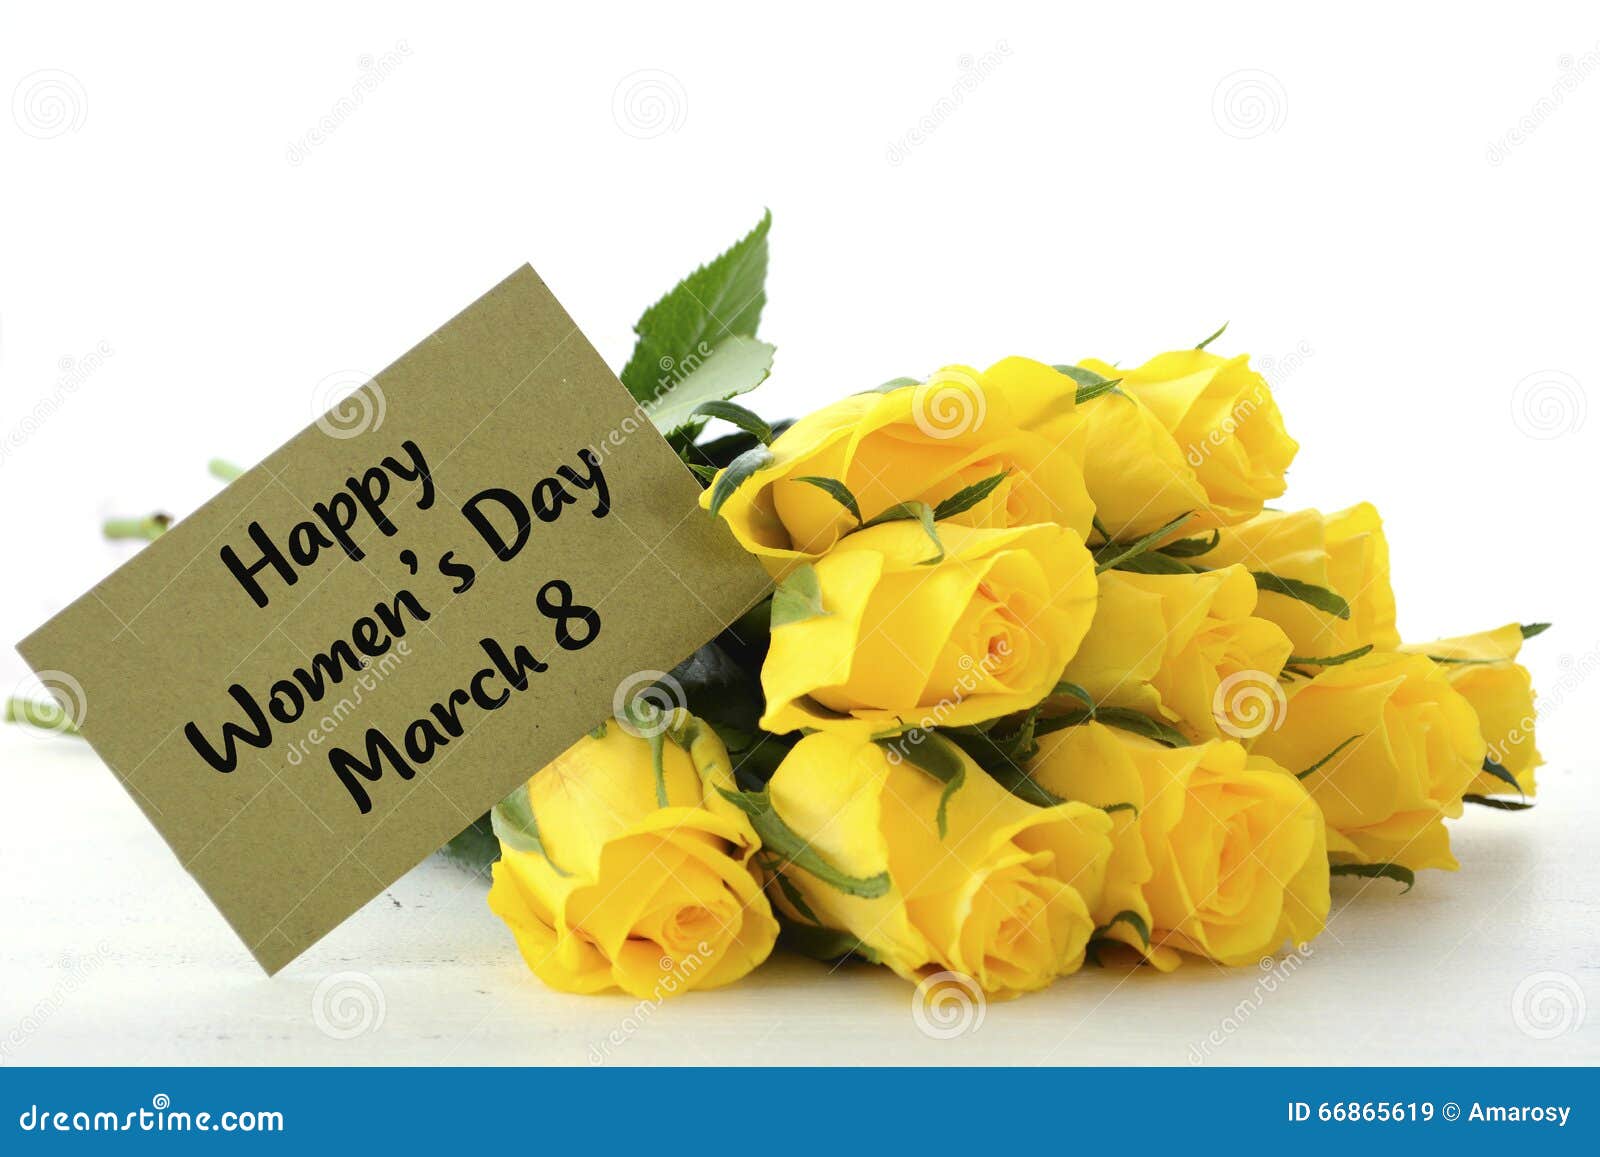 international womens day yellow roses gift.